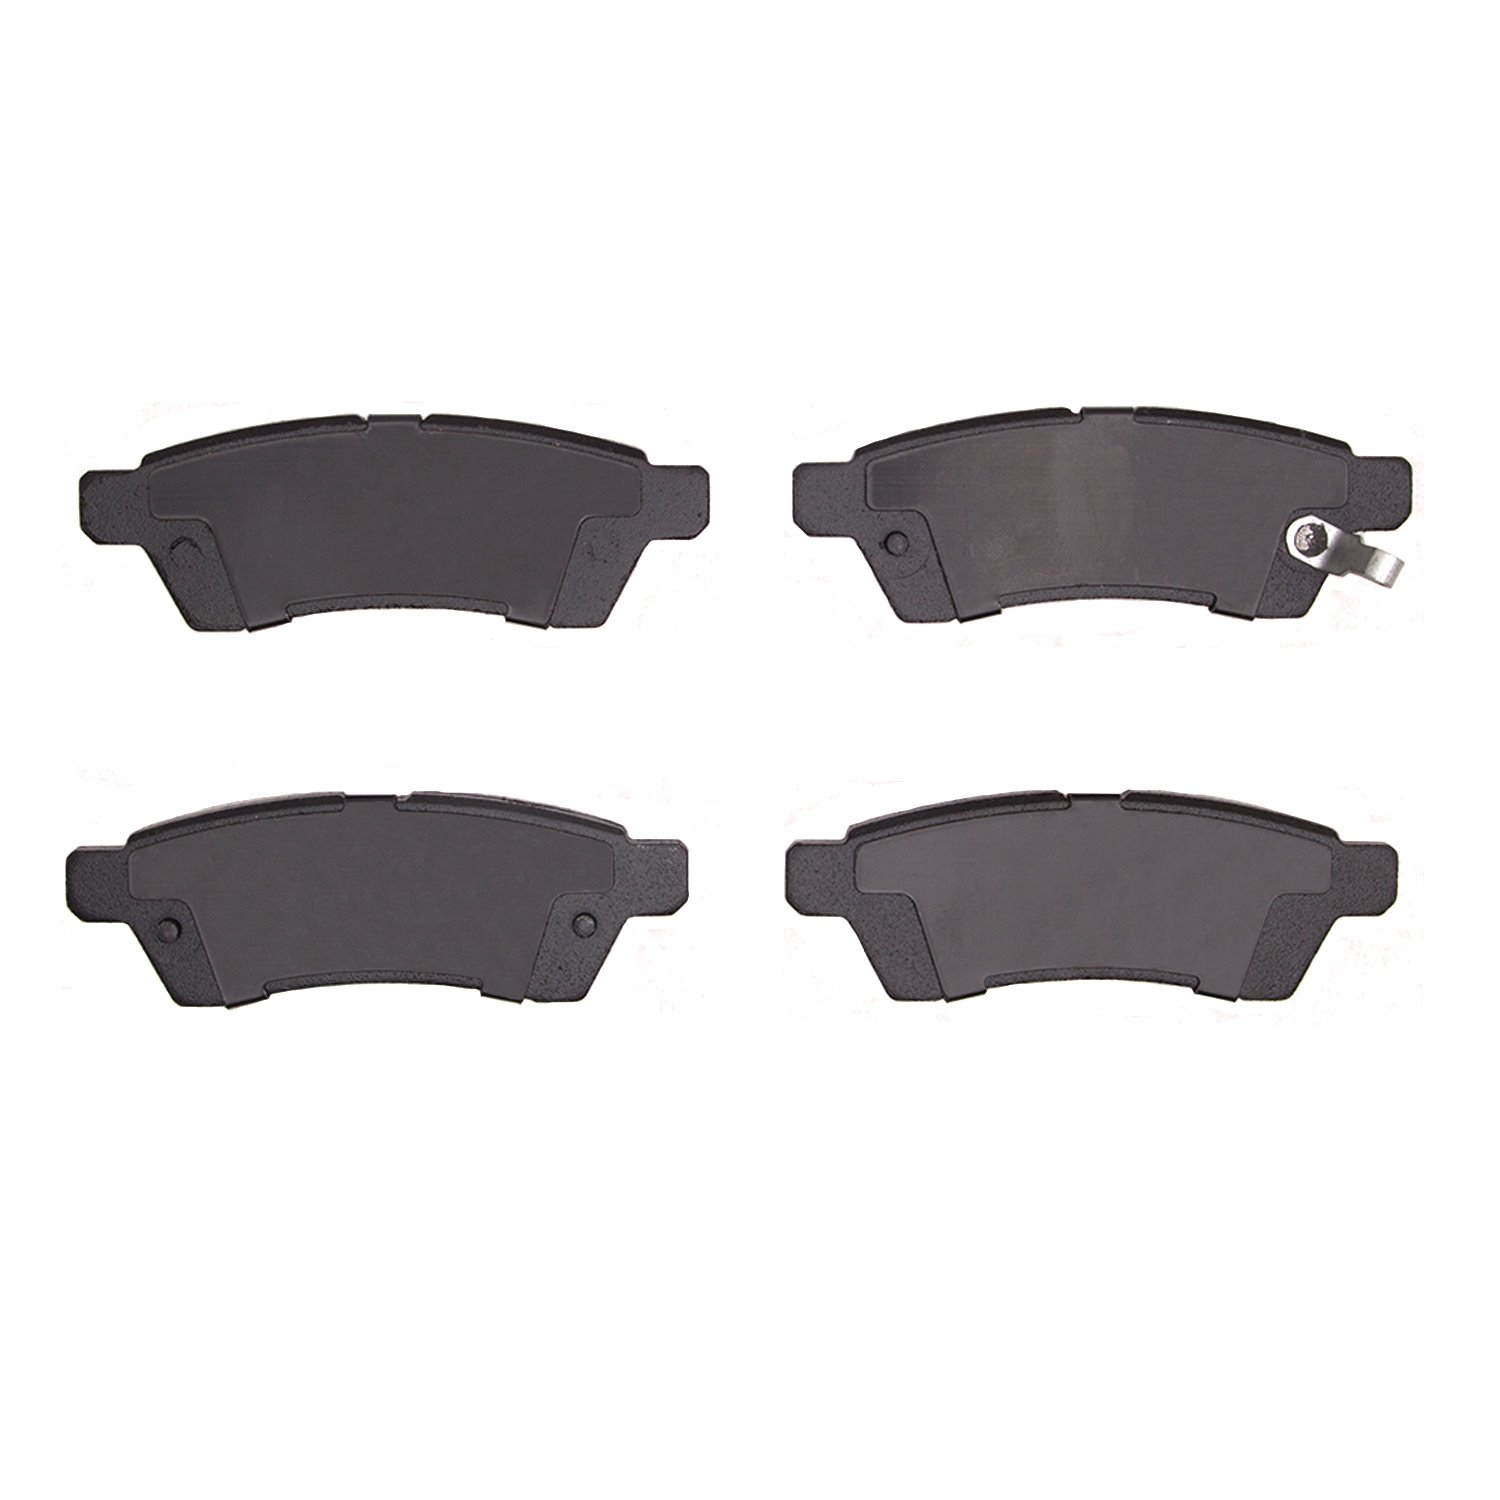 1551-1100-00 5000 Advanced Ceramic Brake Pads, Fits Select Multiple Makes/Models, Position: Rear